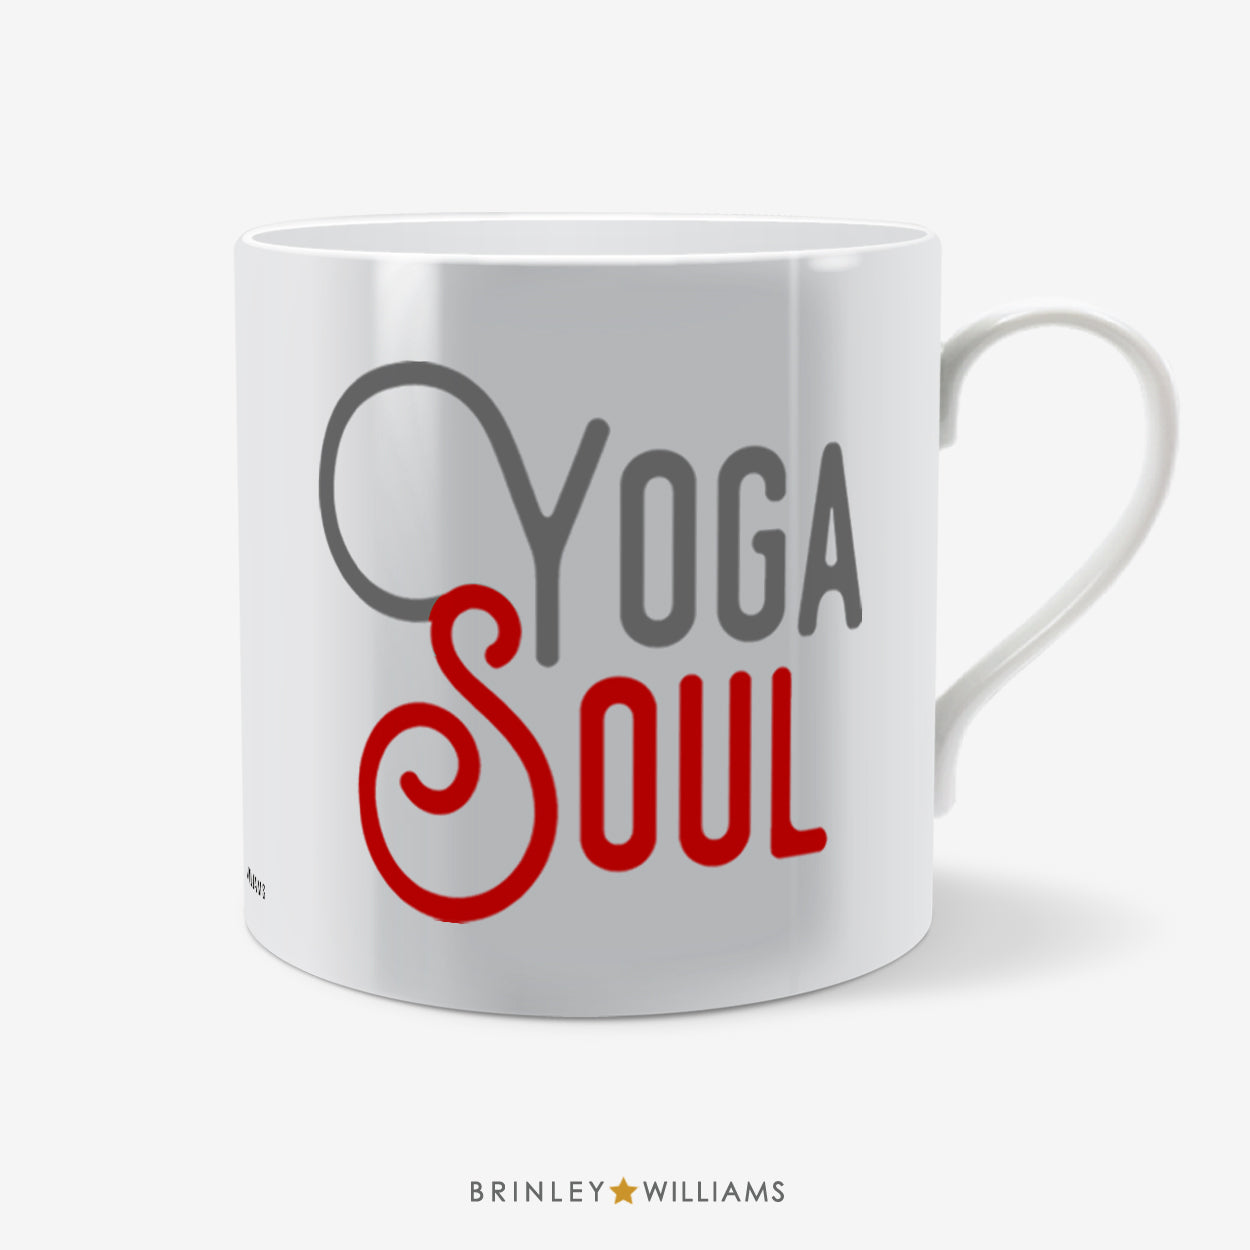 Yoga Soul Mug - Red